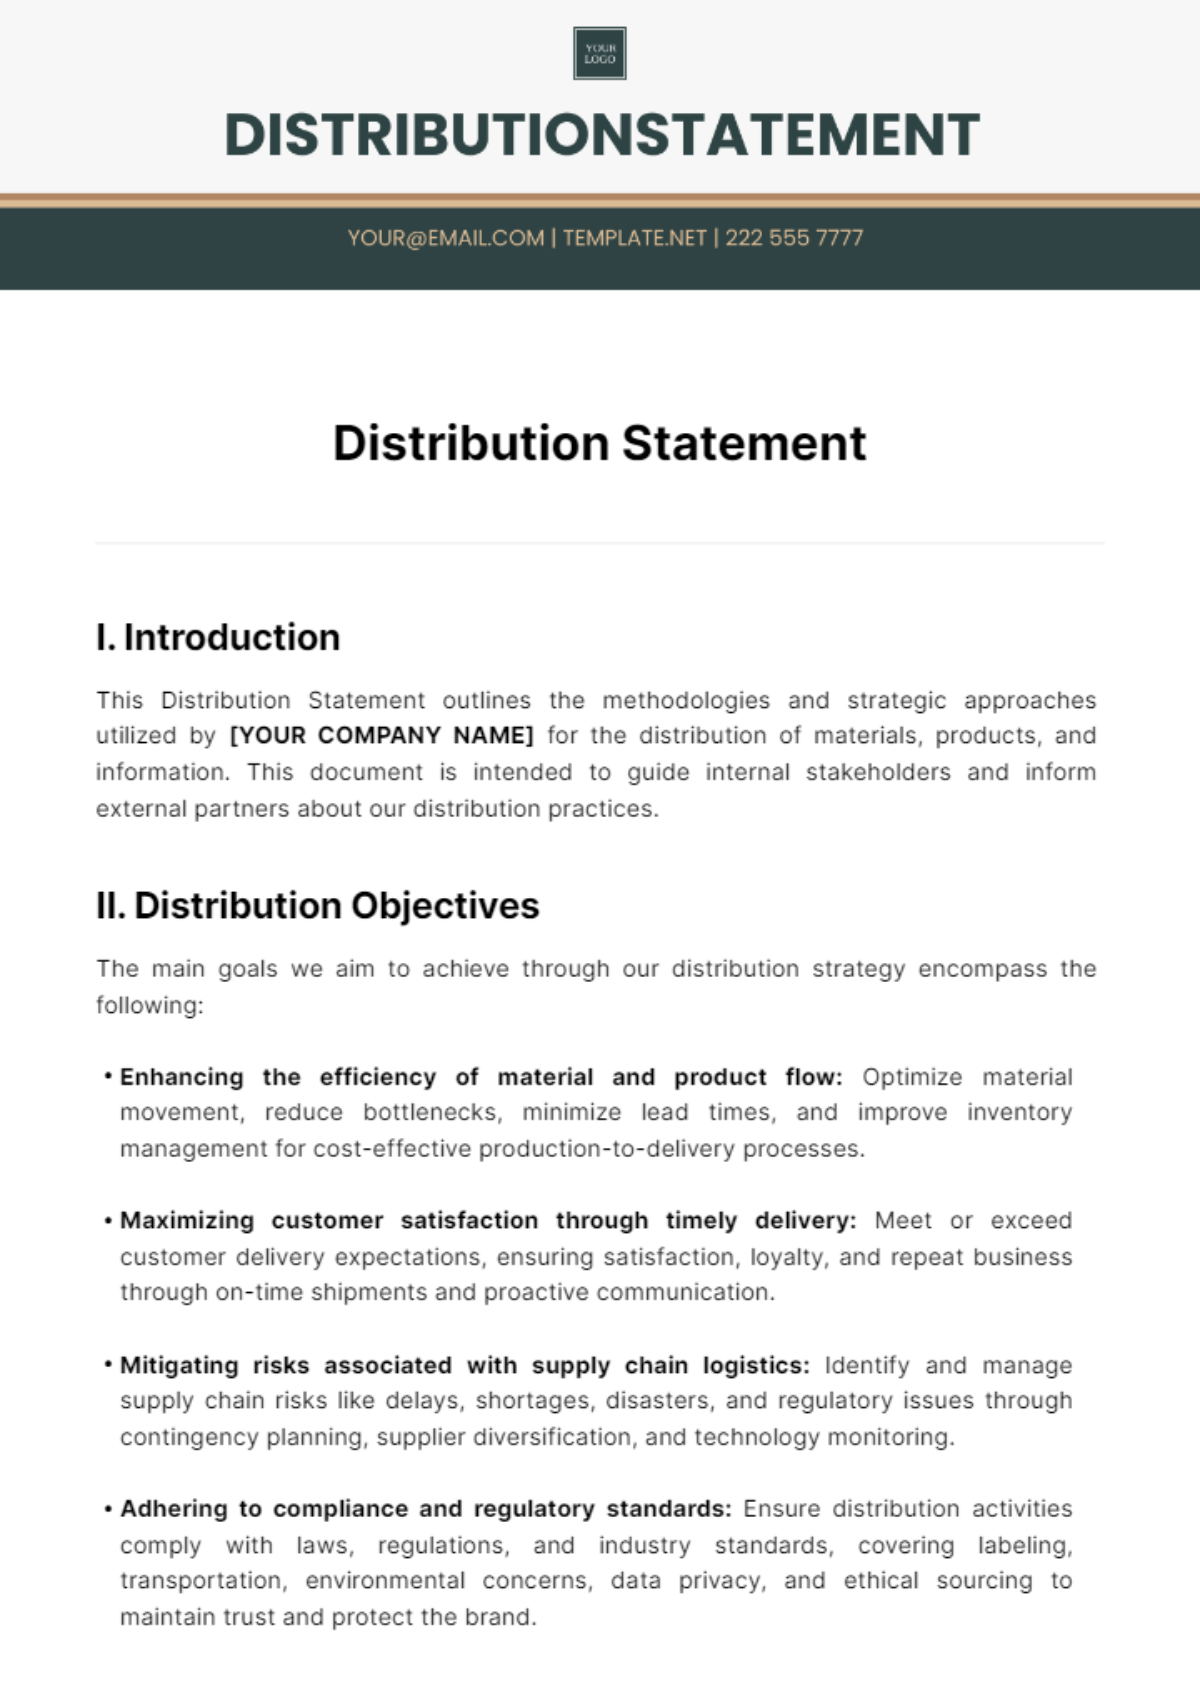 Distribution Statement Template